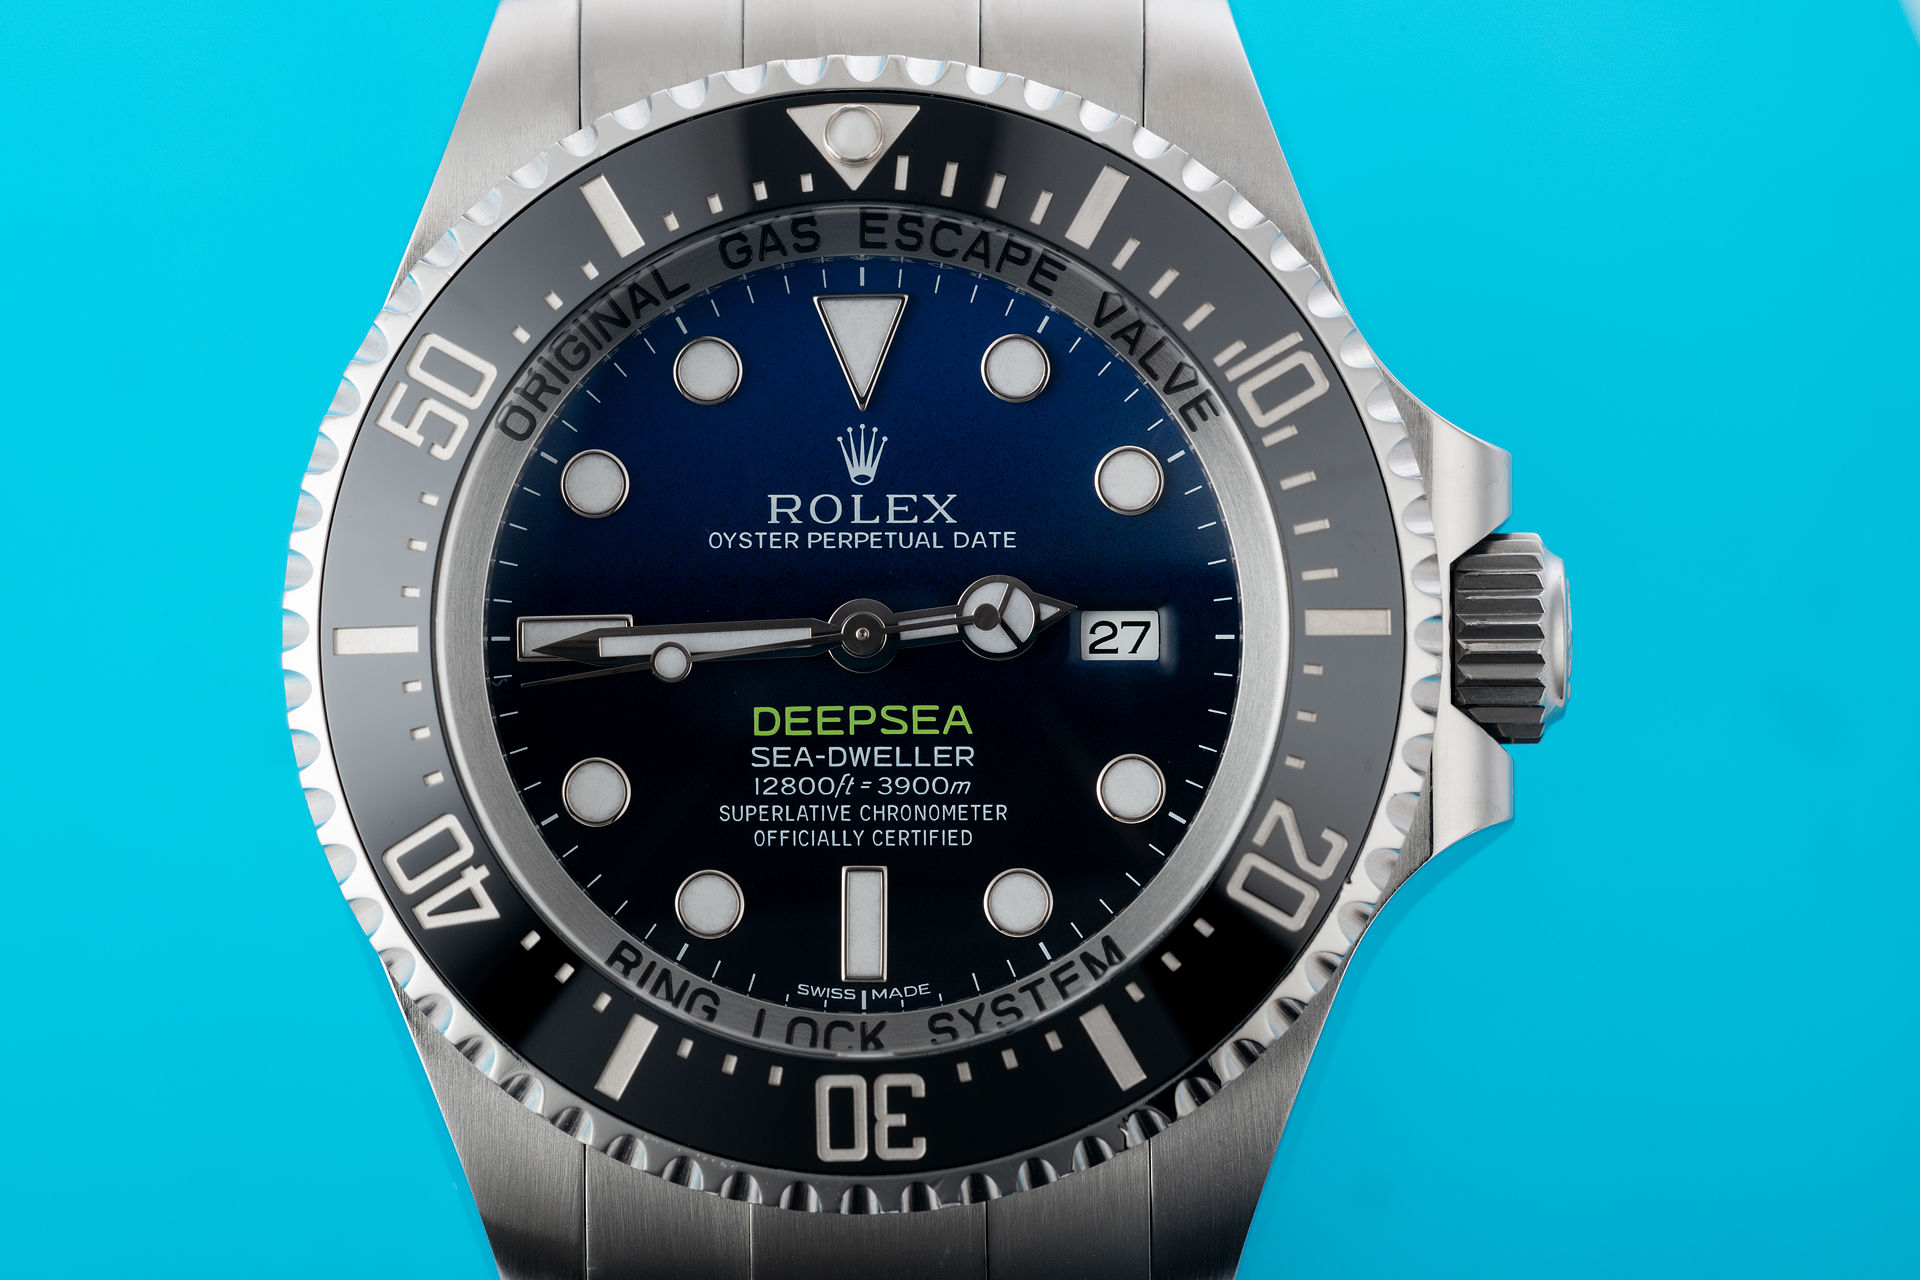 ref 116660 | Under Rolex Warranty 'James Cameron' | Rolex Deepsea D-Blue